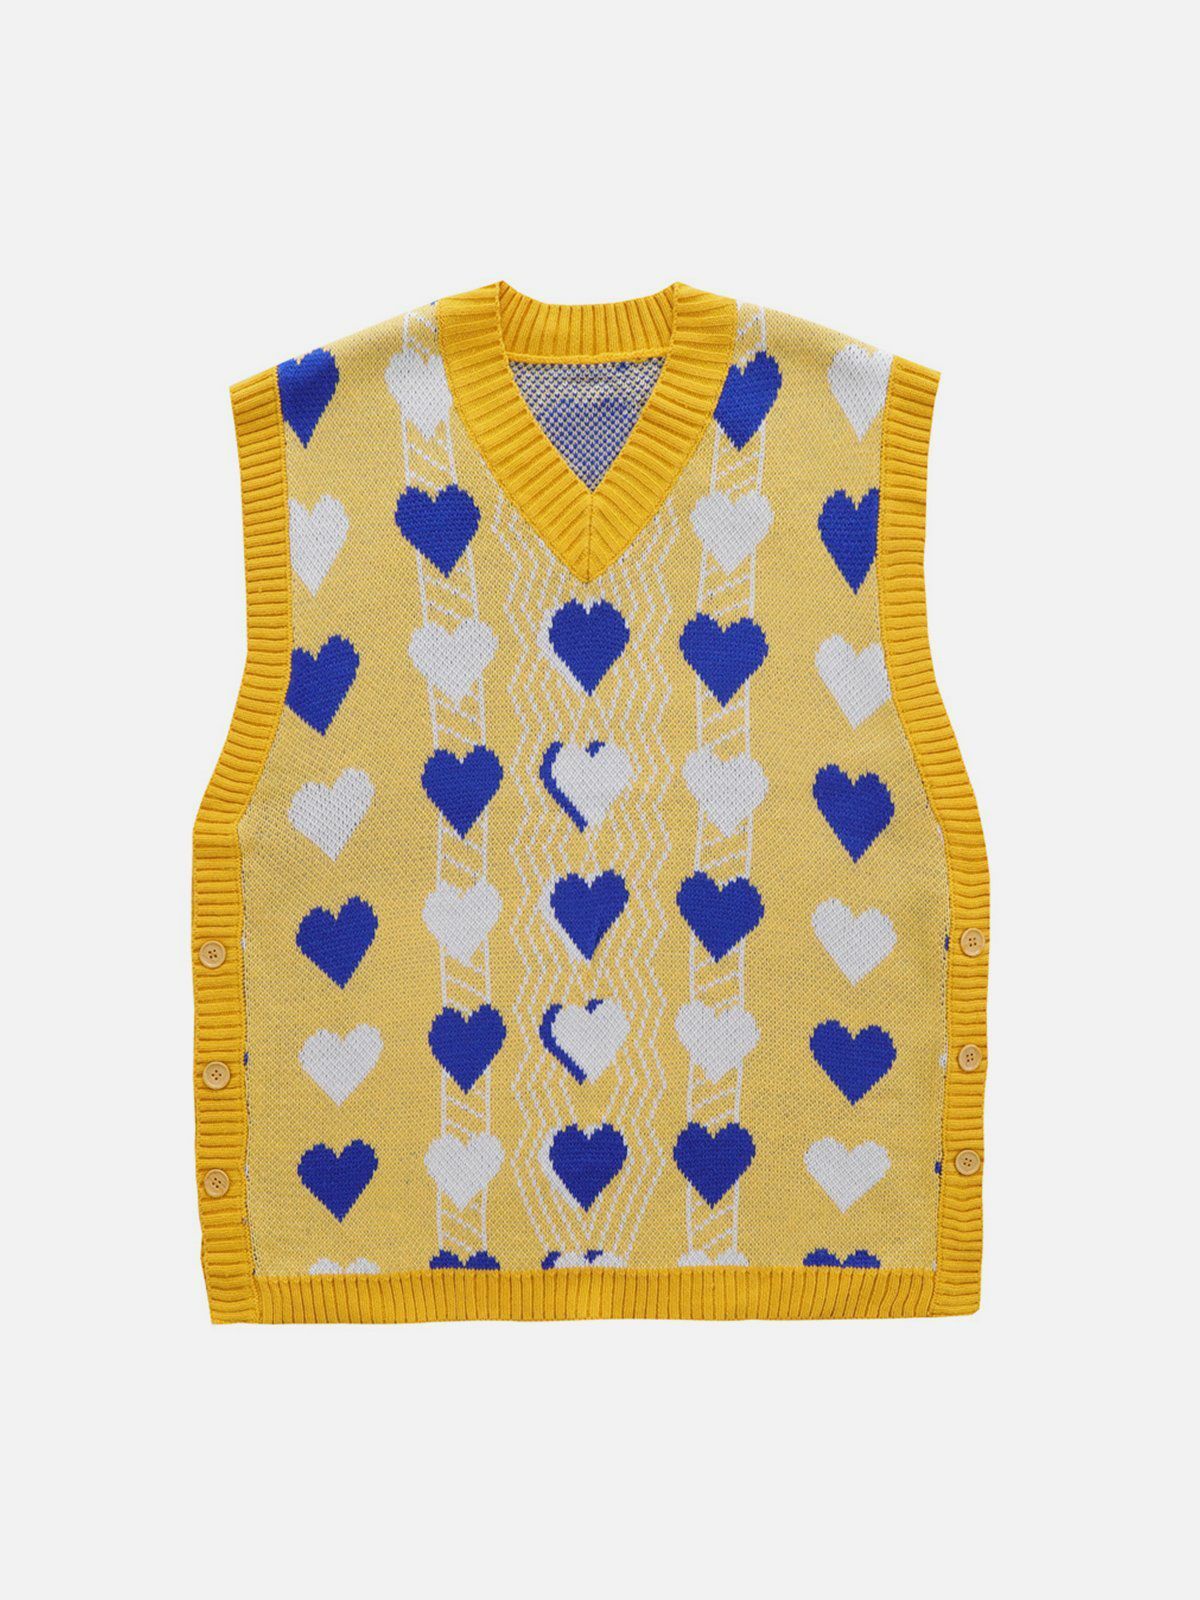 retro clash sweater vest edgy  colorful y2k fashion 2557